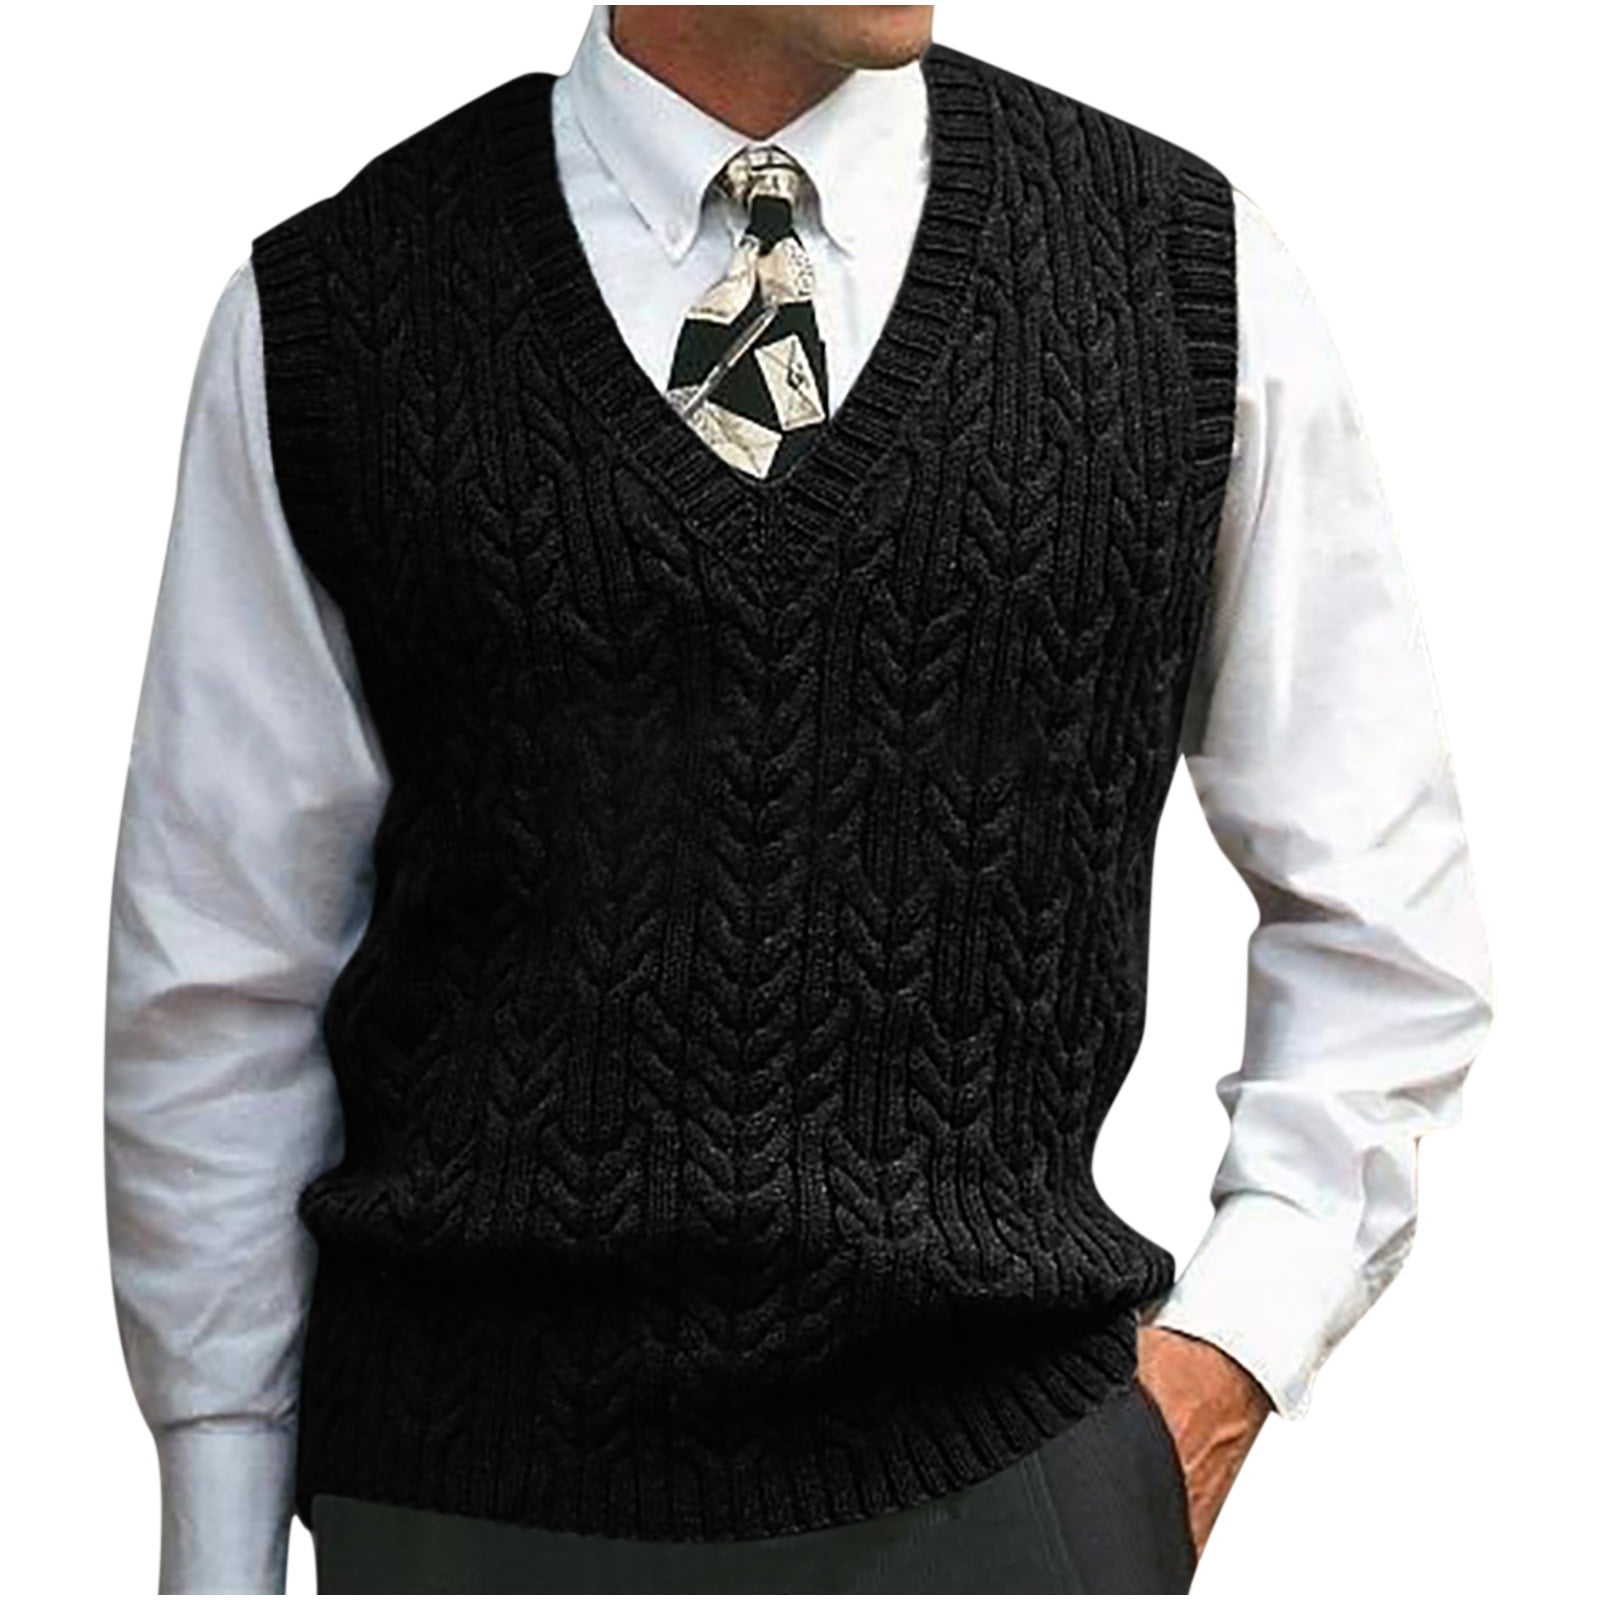 AnuirheiH Knit Sweater Vests for Men V Neck Sleeveless Sweater Winter ...